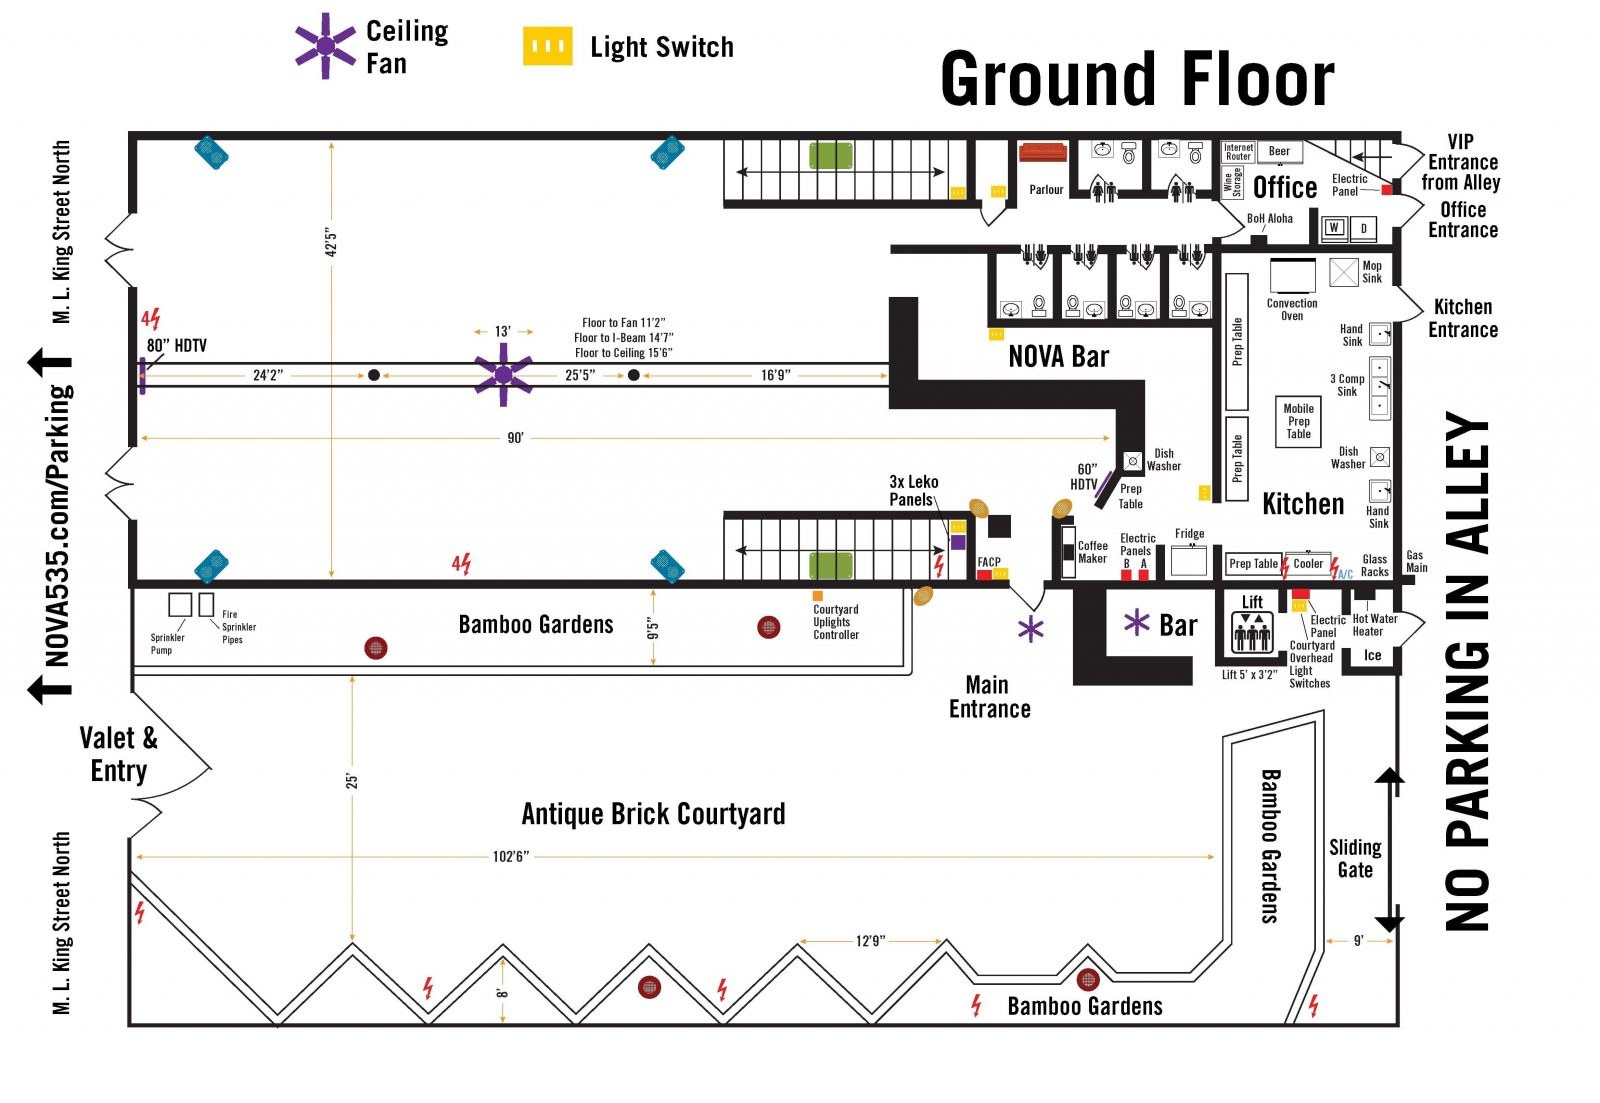 2019 historic downtown St. Pete venue NOVA 535 Venue Map and Dimensions - ground floor